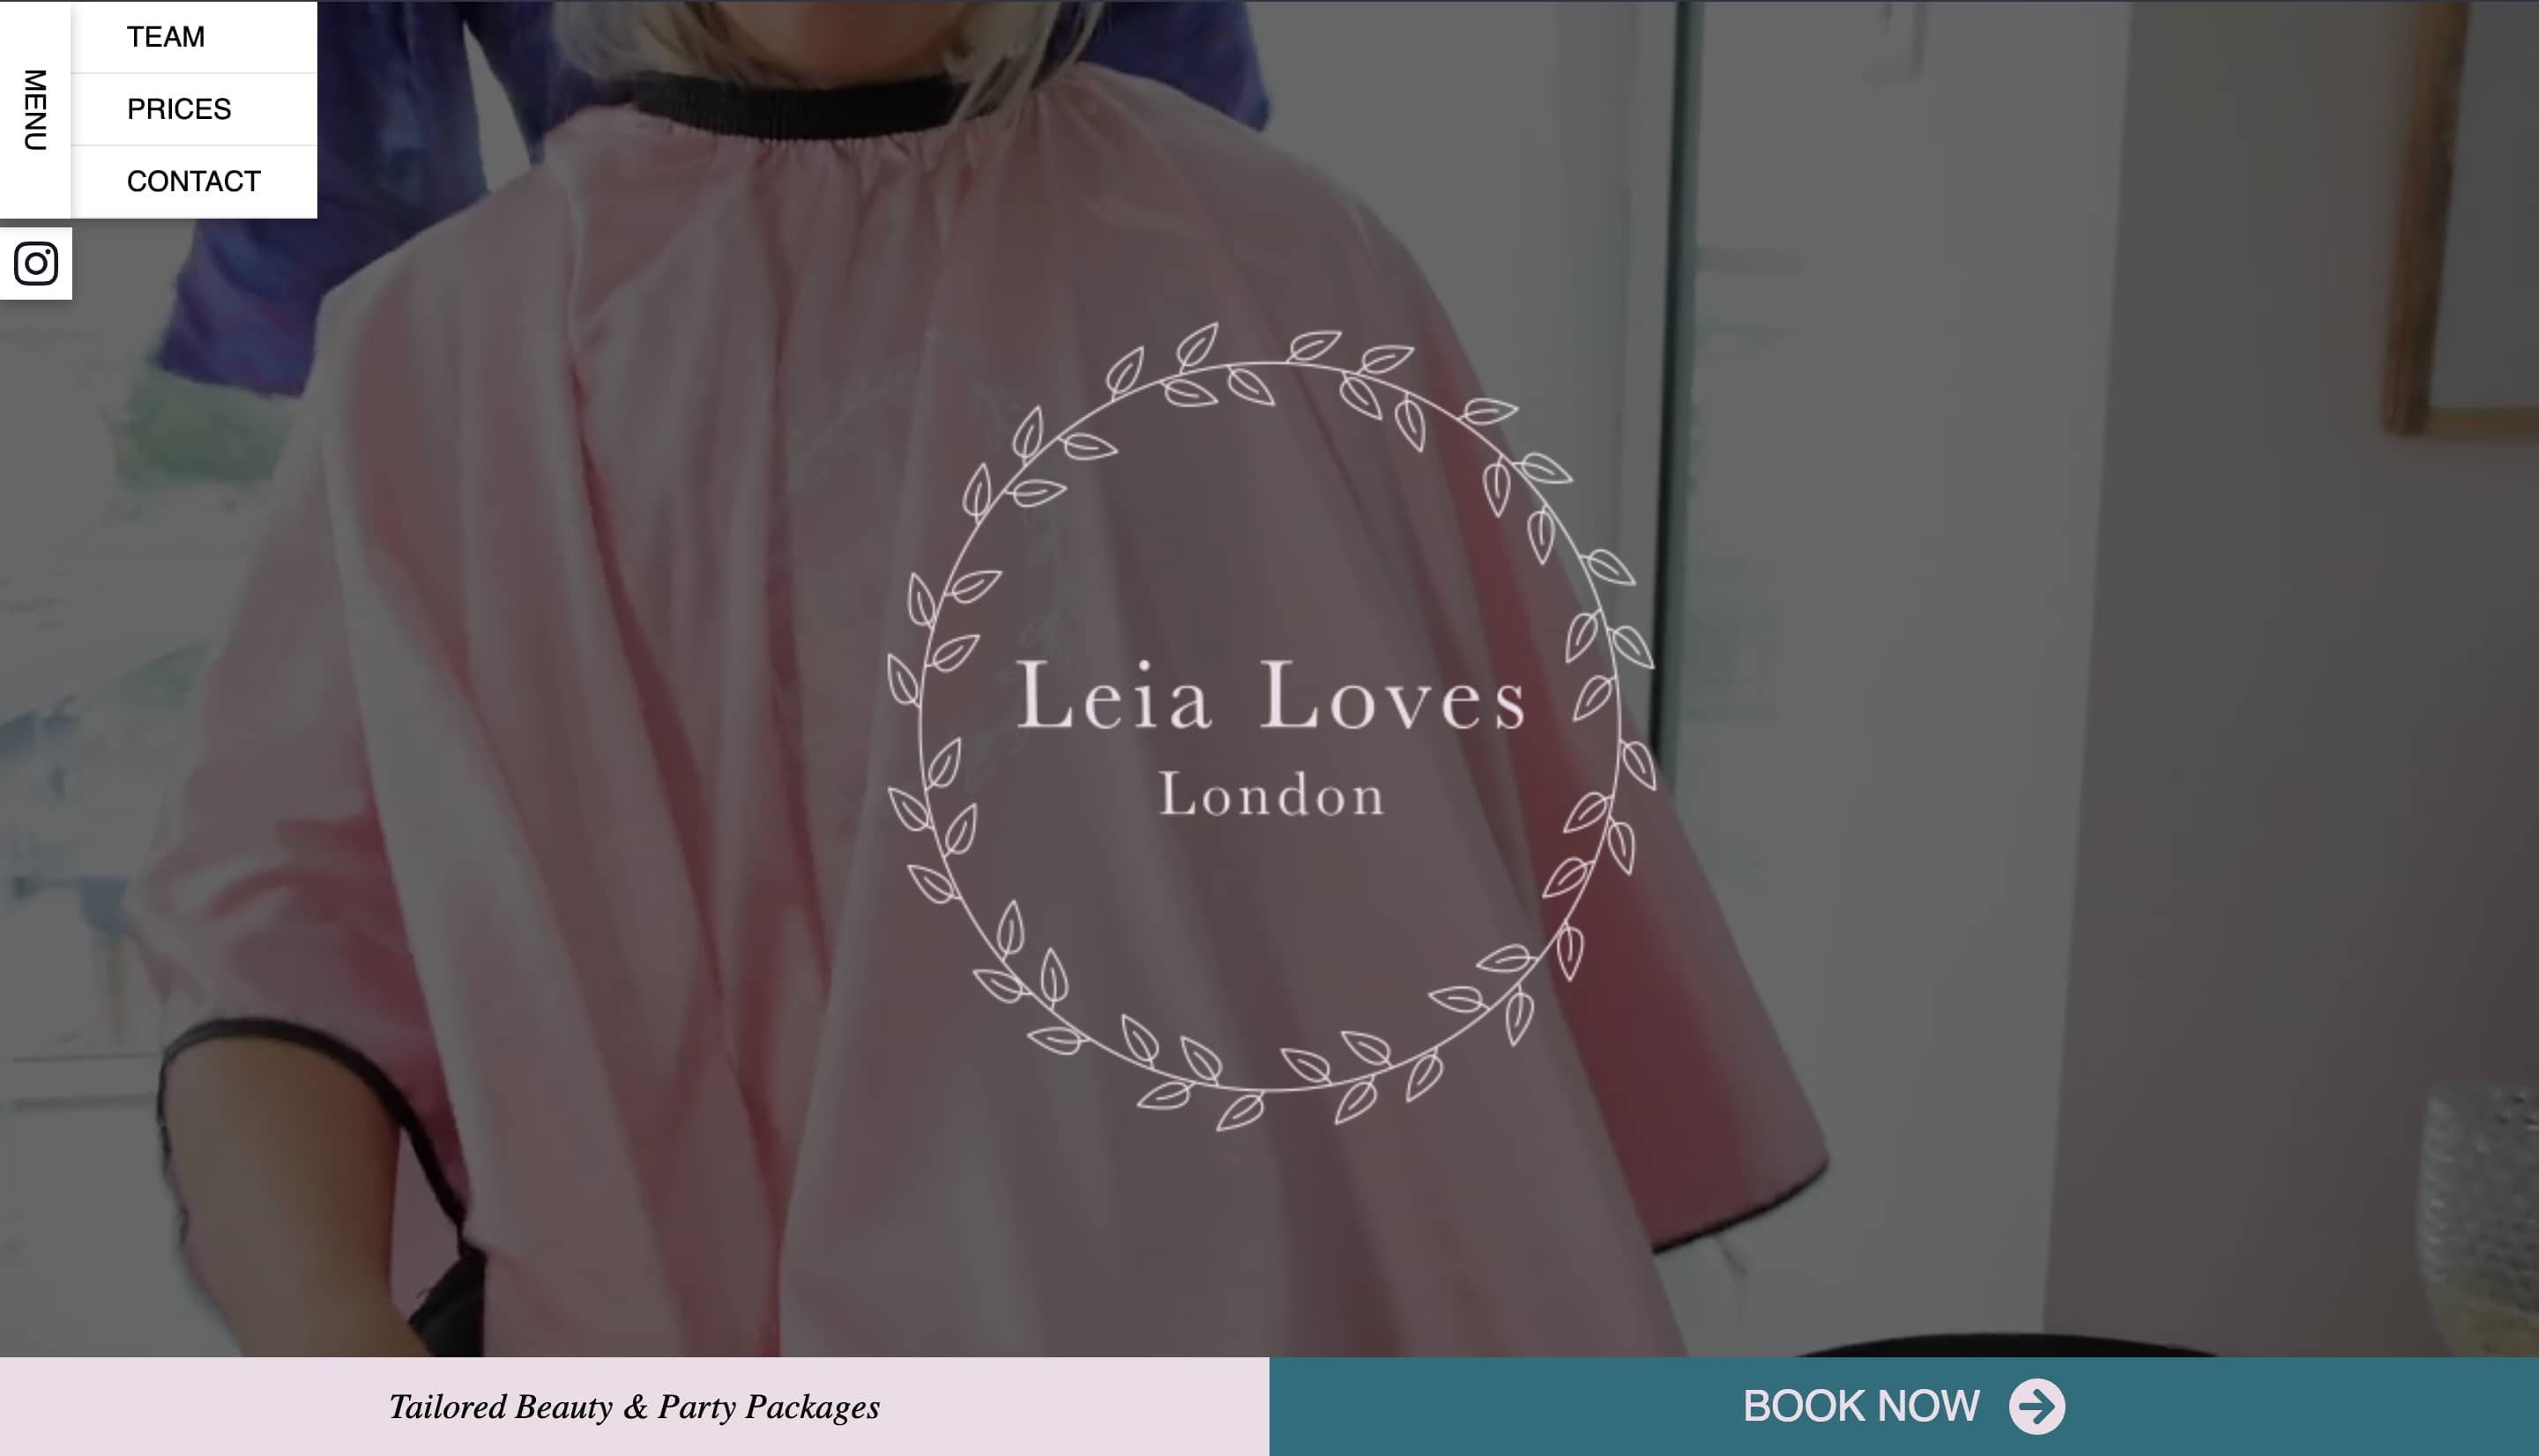 Leia Loves London website screenshot